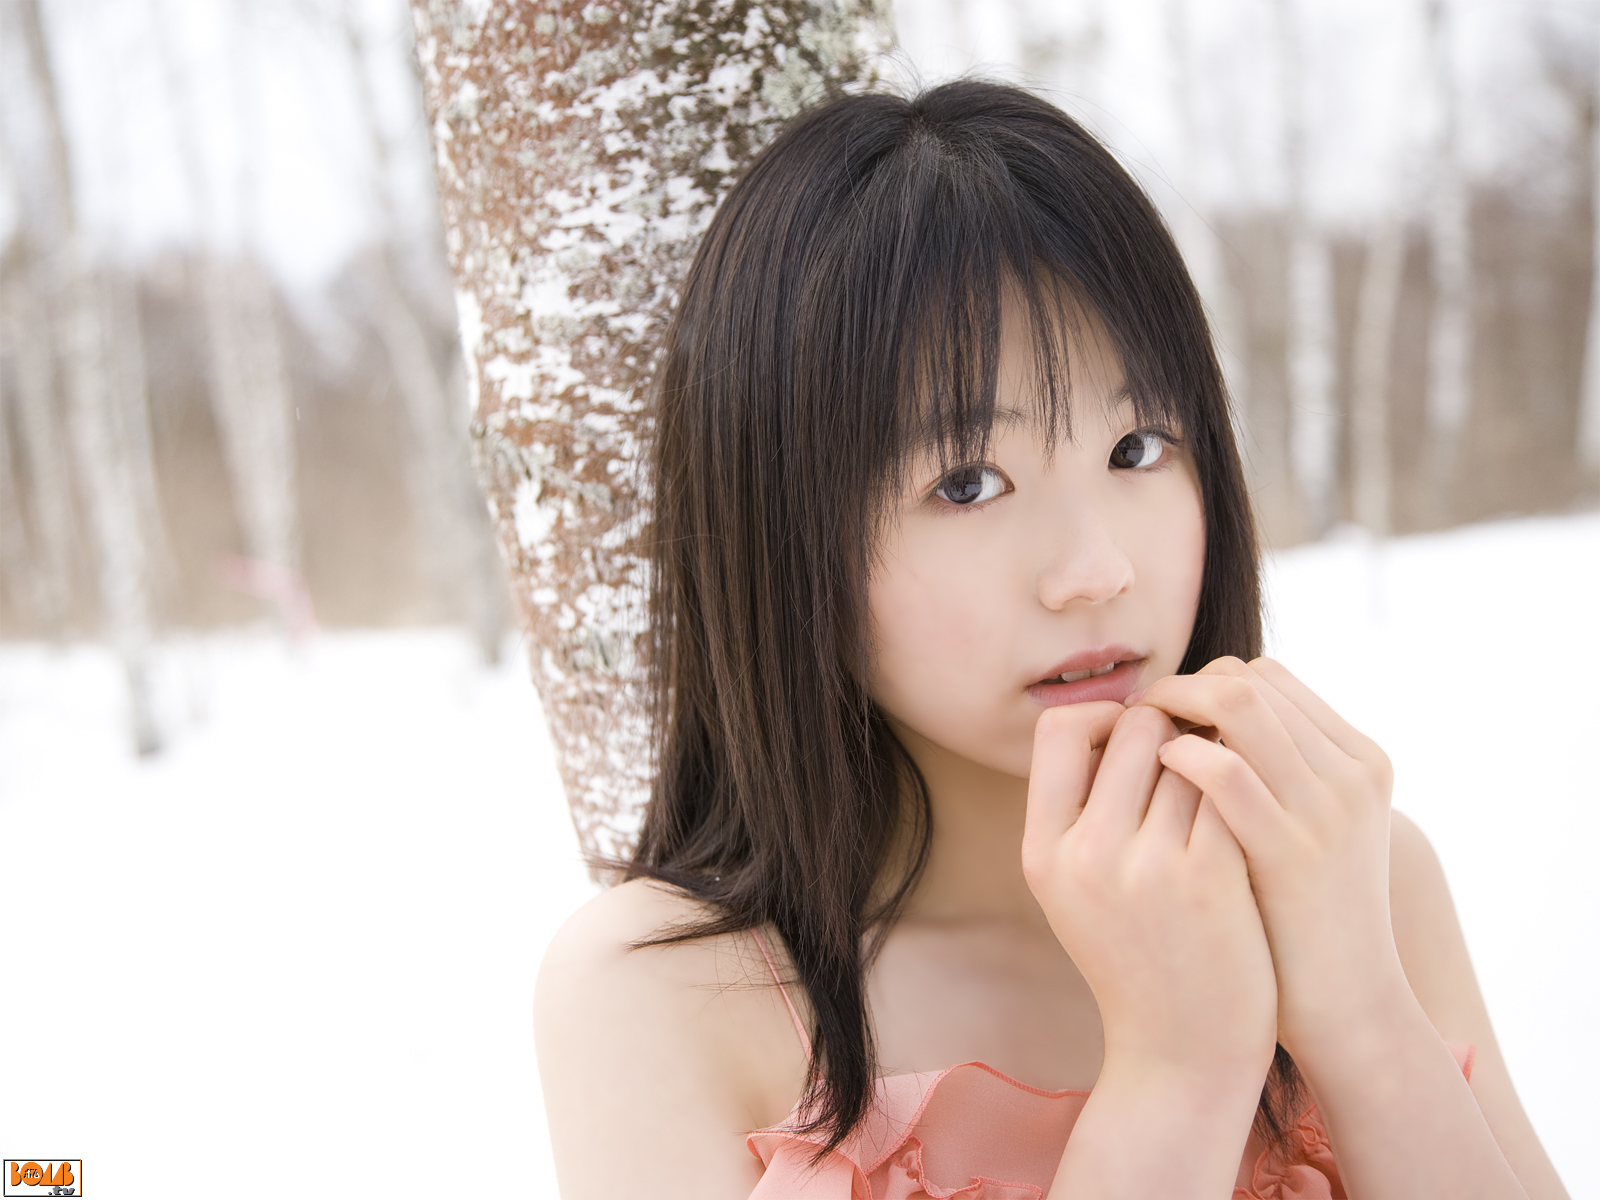 Rina Koike snow day, hot young asean girl.